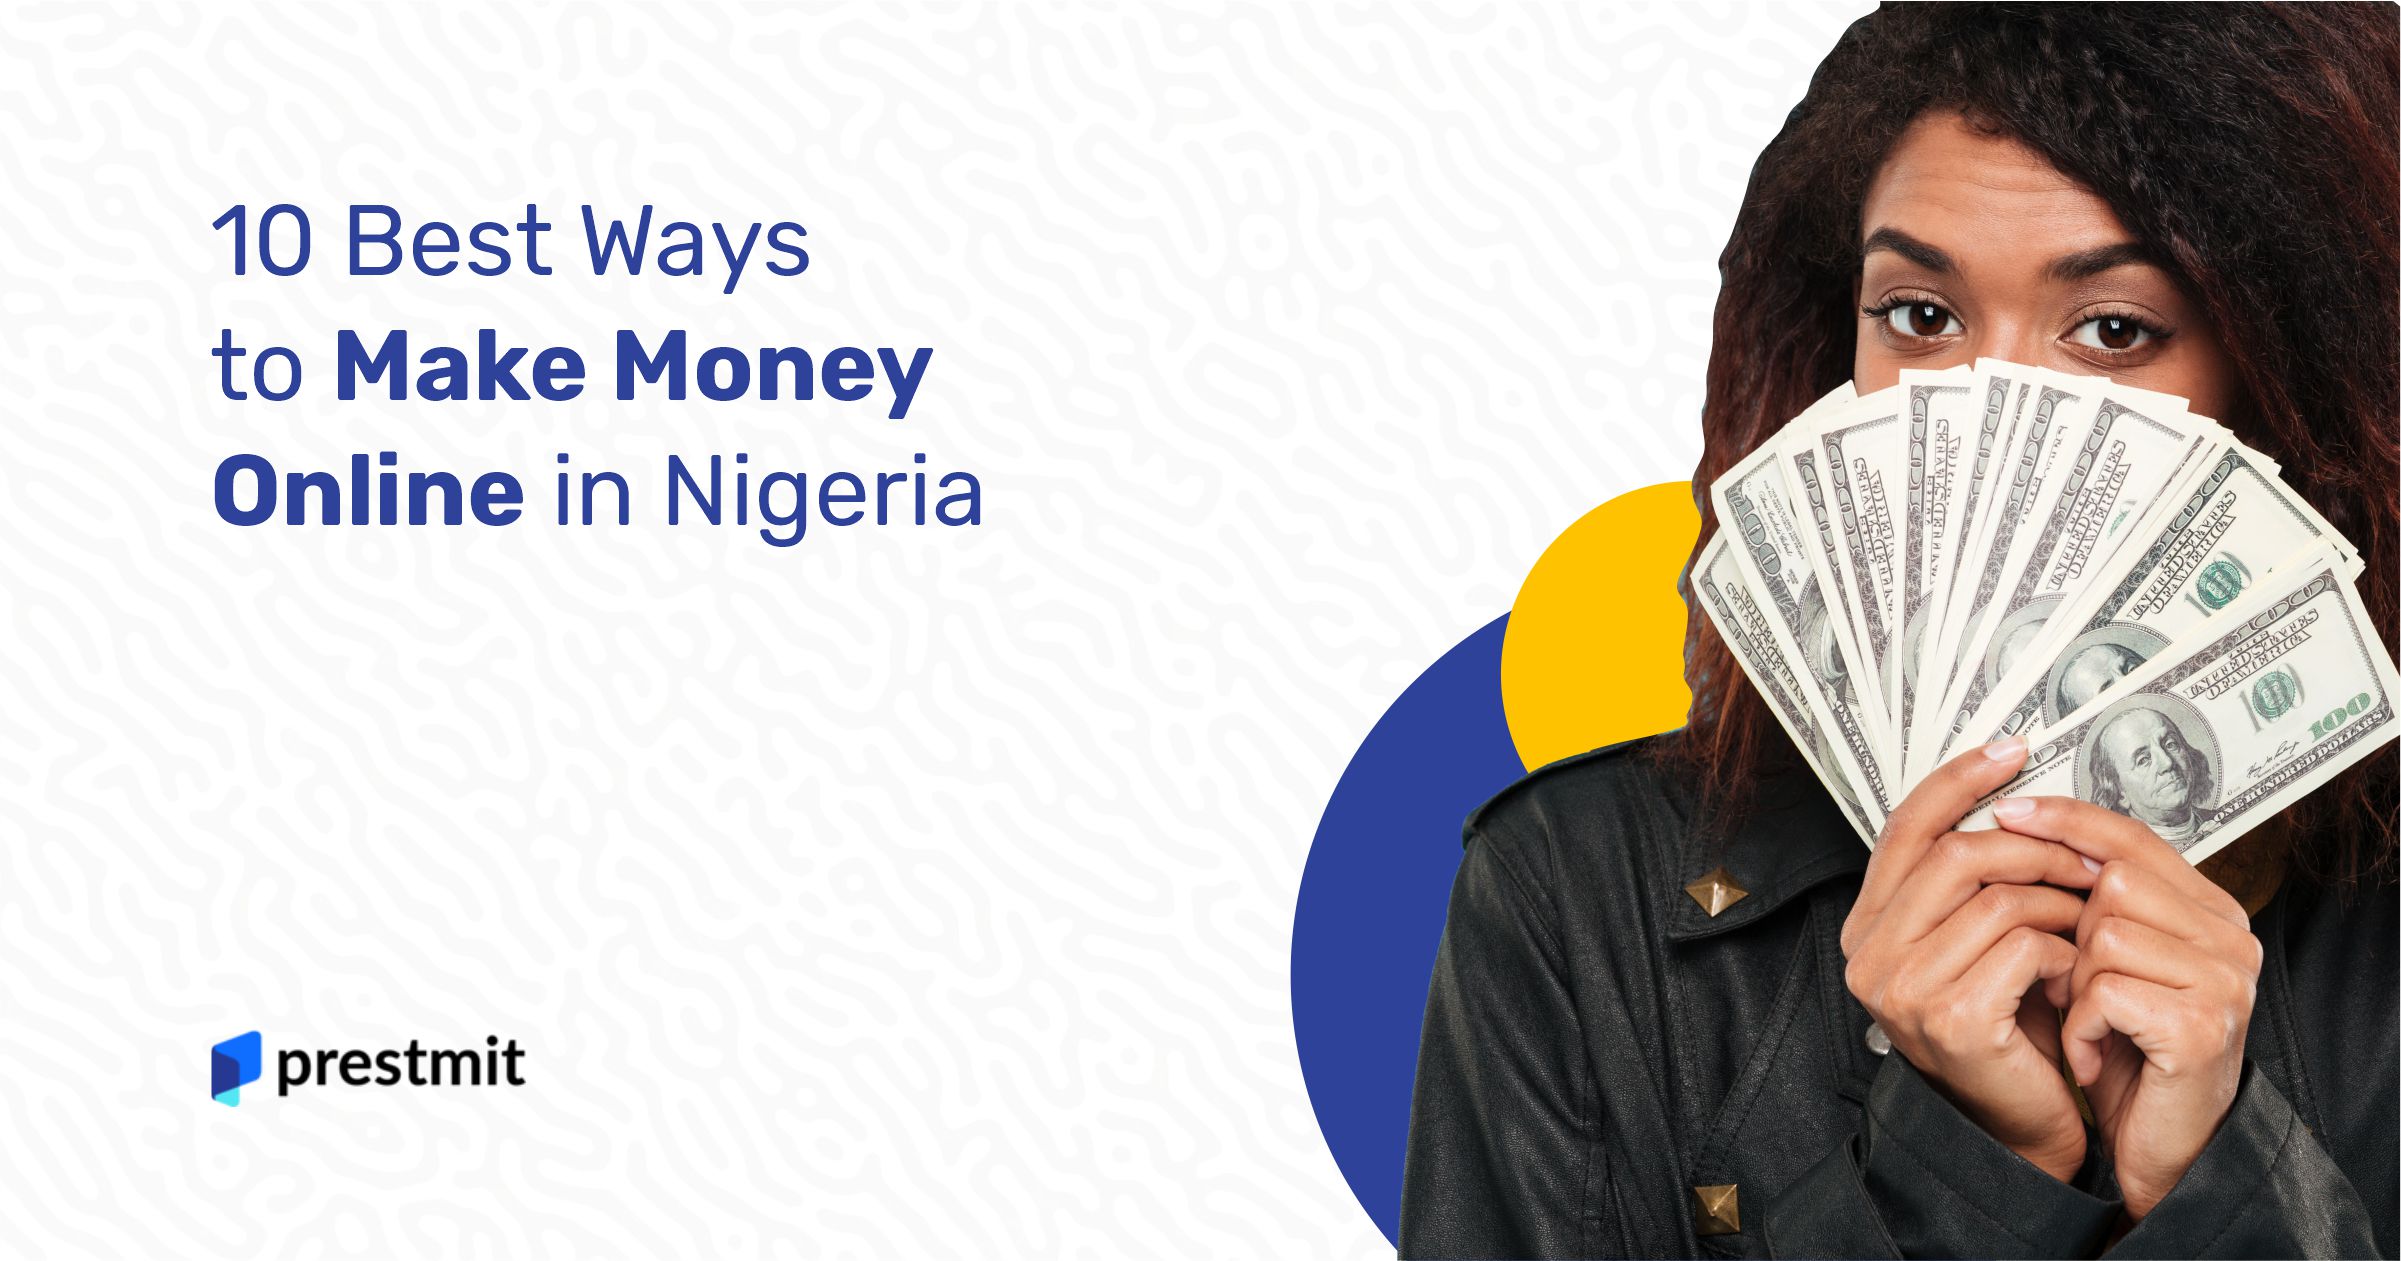 How to Make Money Online in Nigeria: Fastest Ways and Legitimate Methods